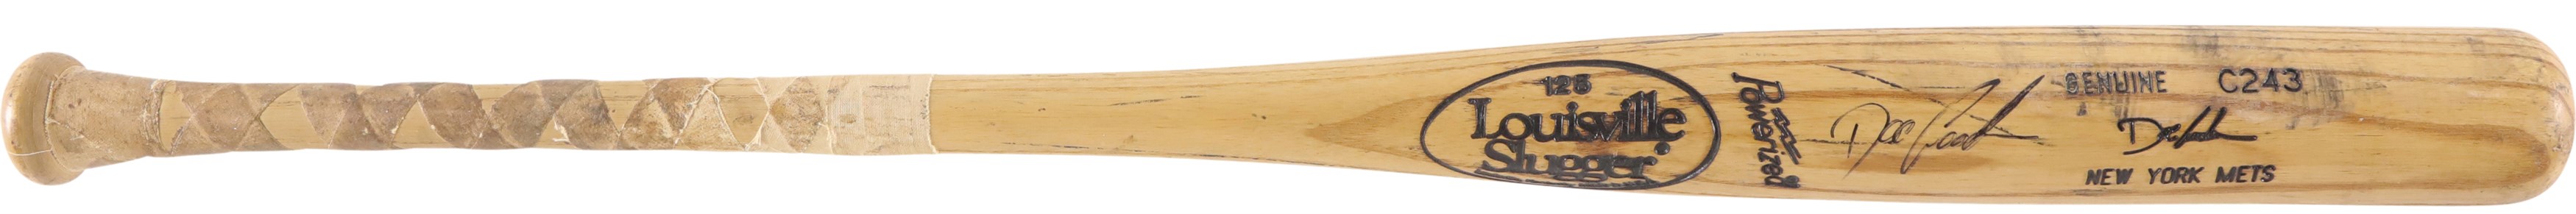 1993 Dwight Gooden New York Mets Game Used Bat (PSA GU 10)